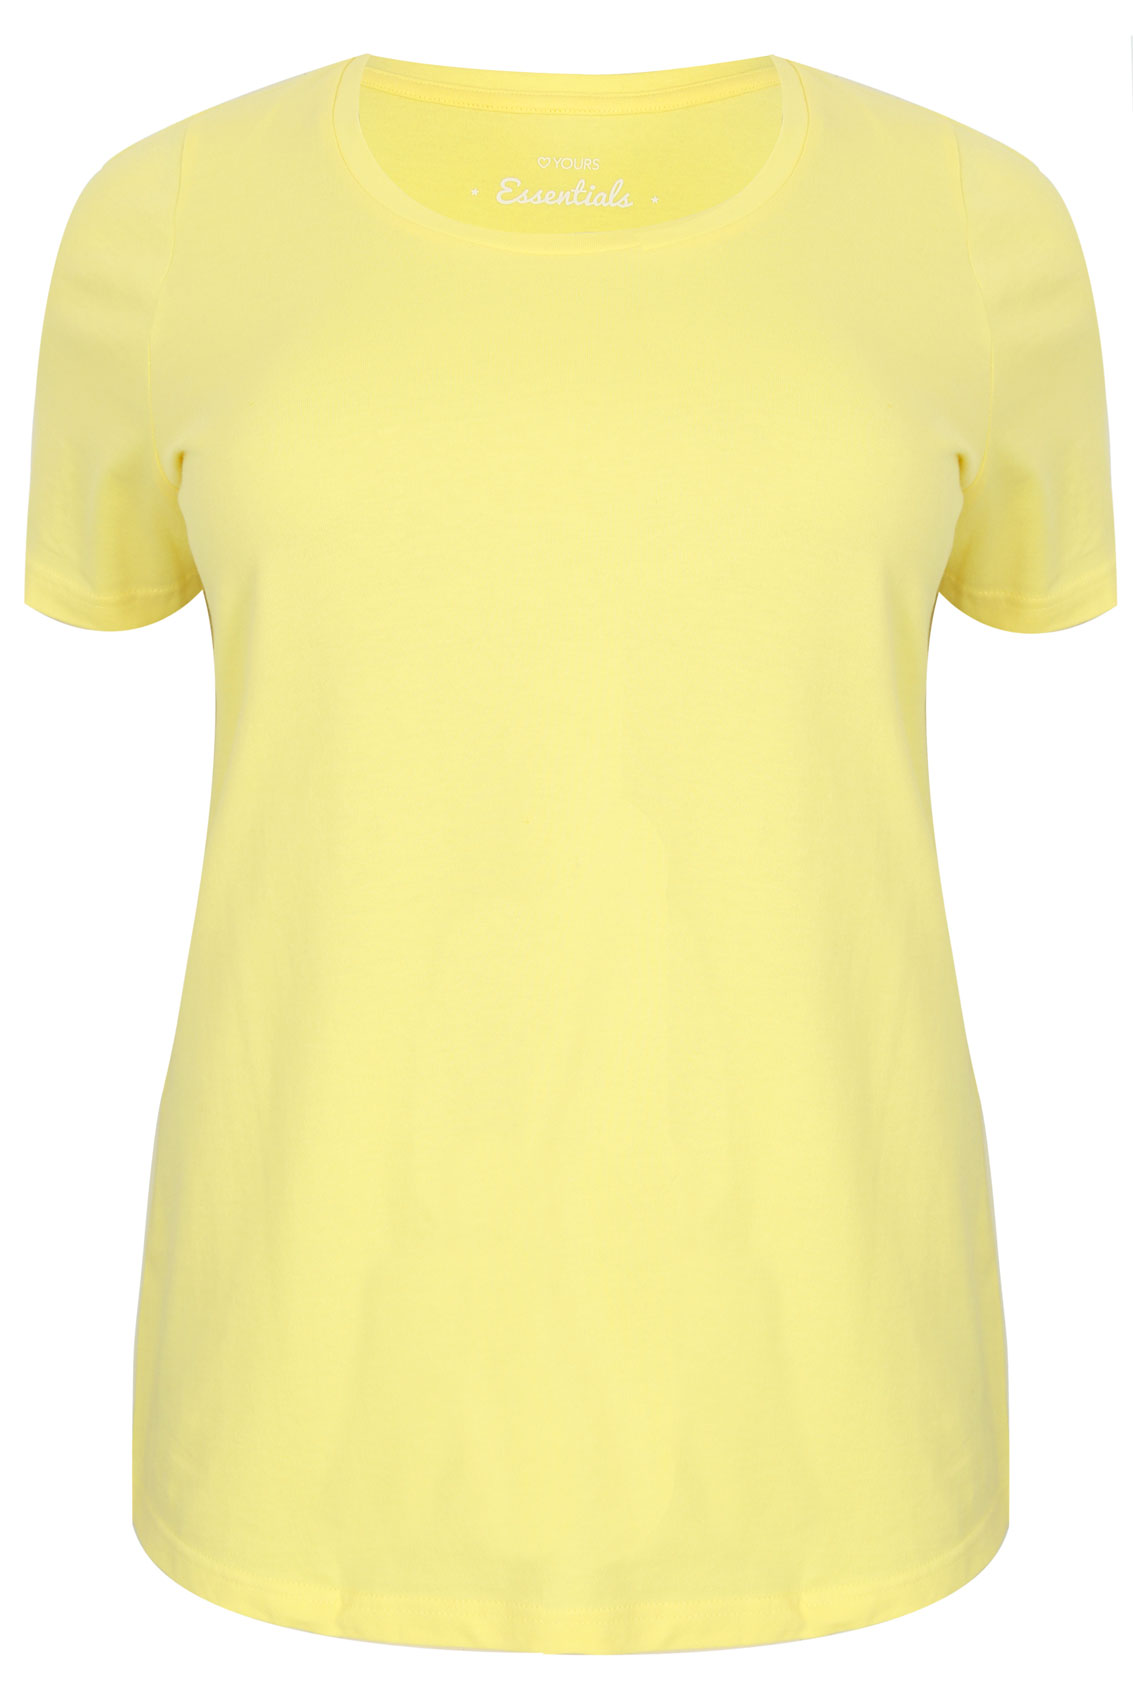 Lemon Yellow Scoop Neck Cotton T-Shirt Plus Size 16 to 36